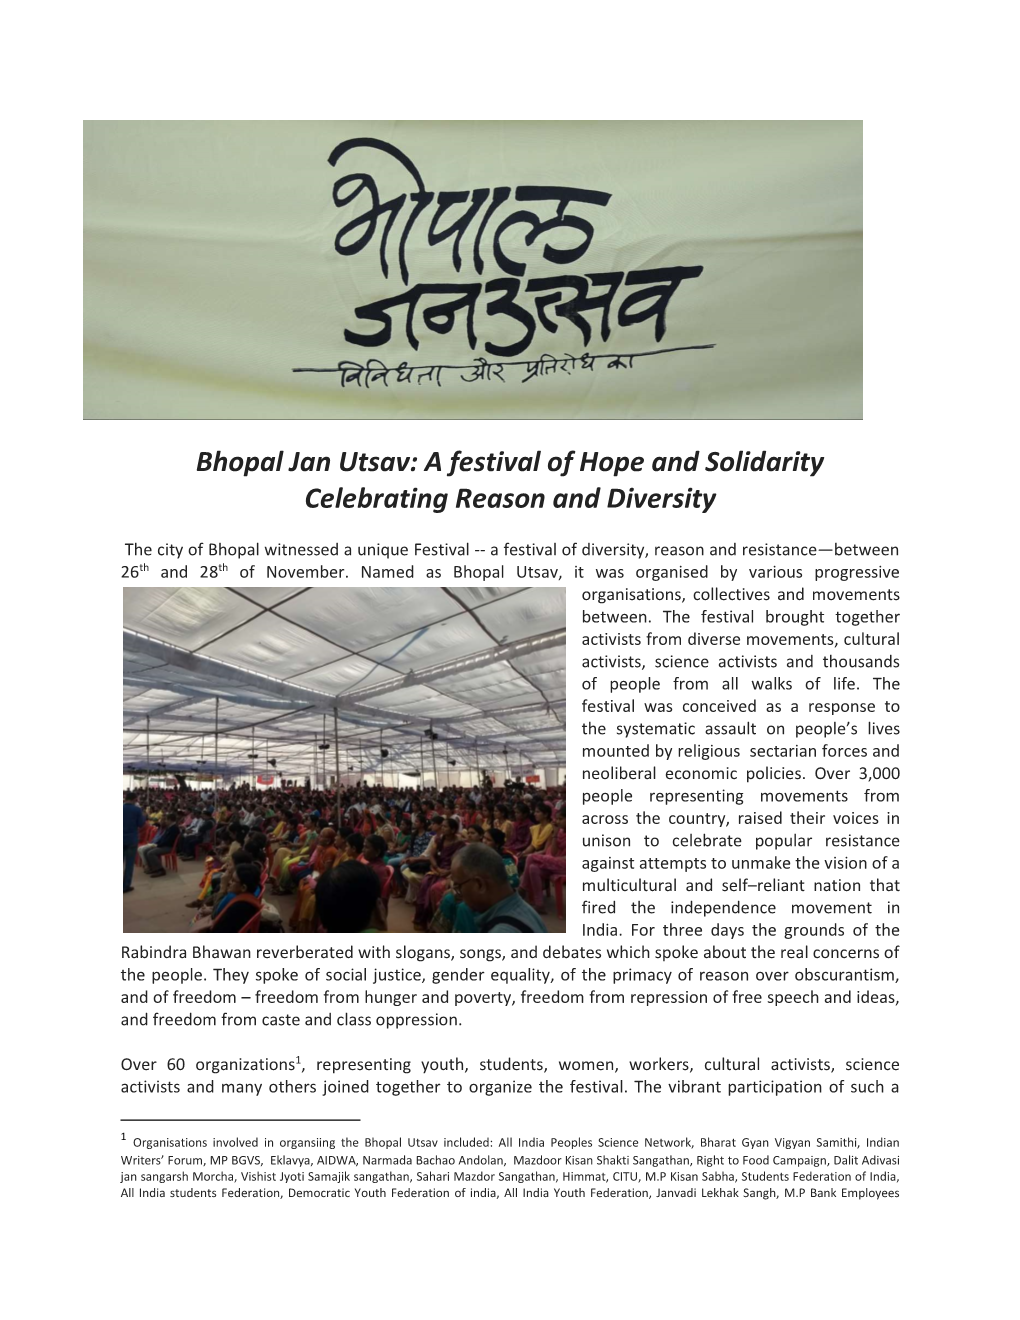 Bhopal Jan Utsav: a Festival of Hope and Solidarity Celebrating Reason and Diversity